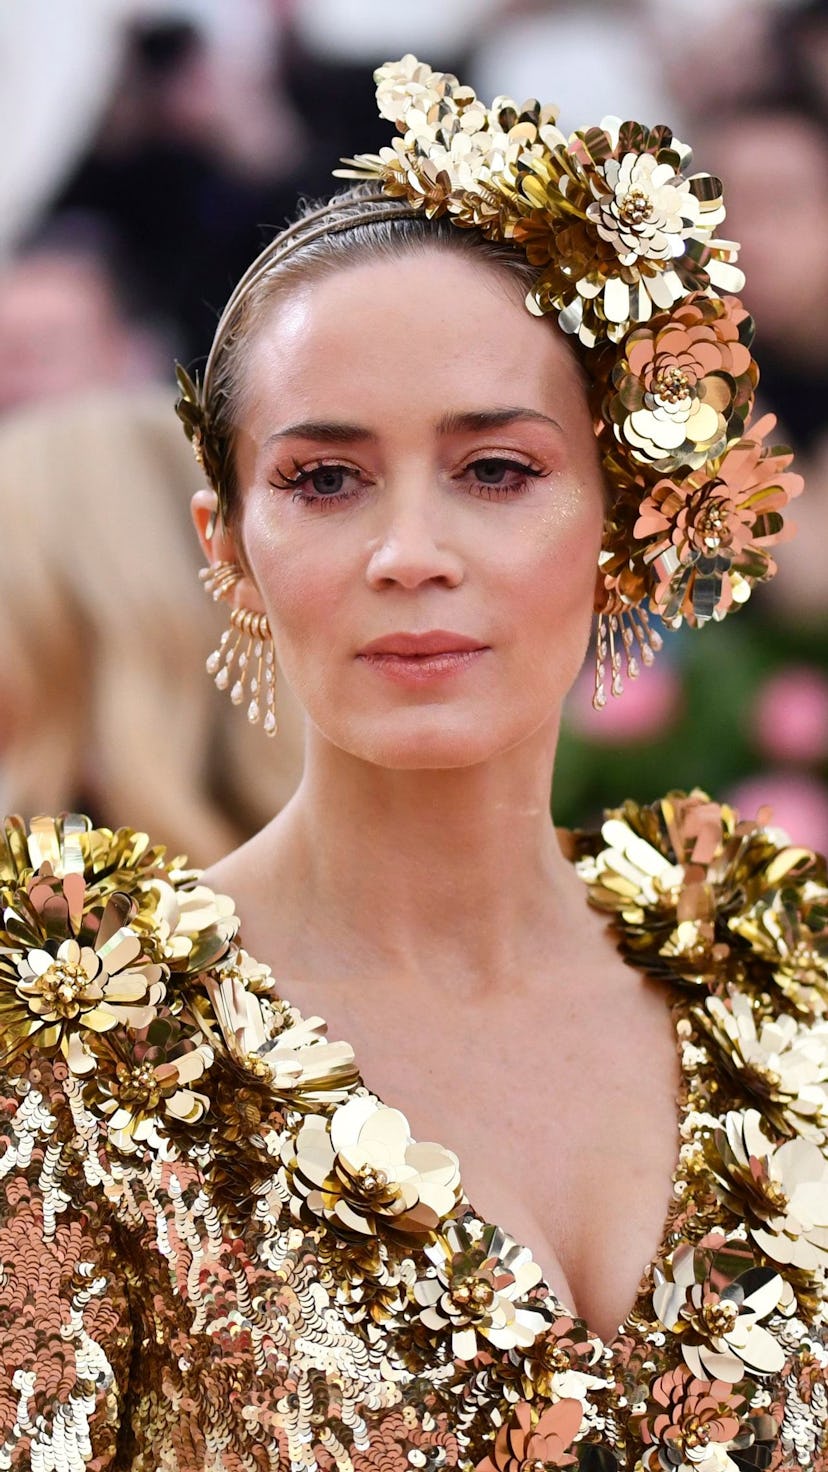 Emily Blunt attends The Metropolitan Museum of Art's Costume Institute benefit gala in 2019.